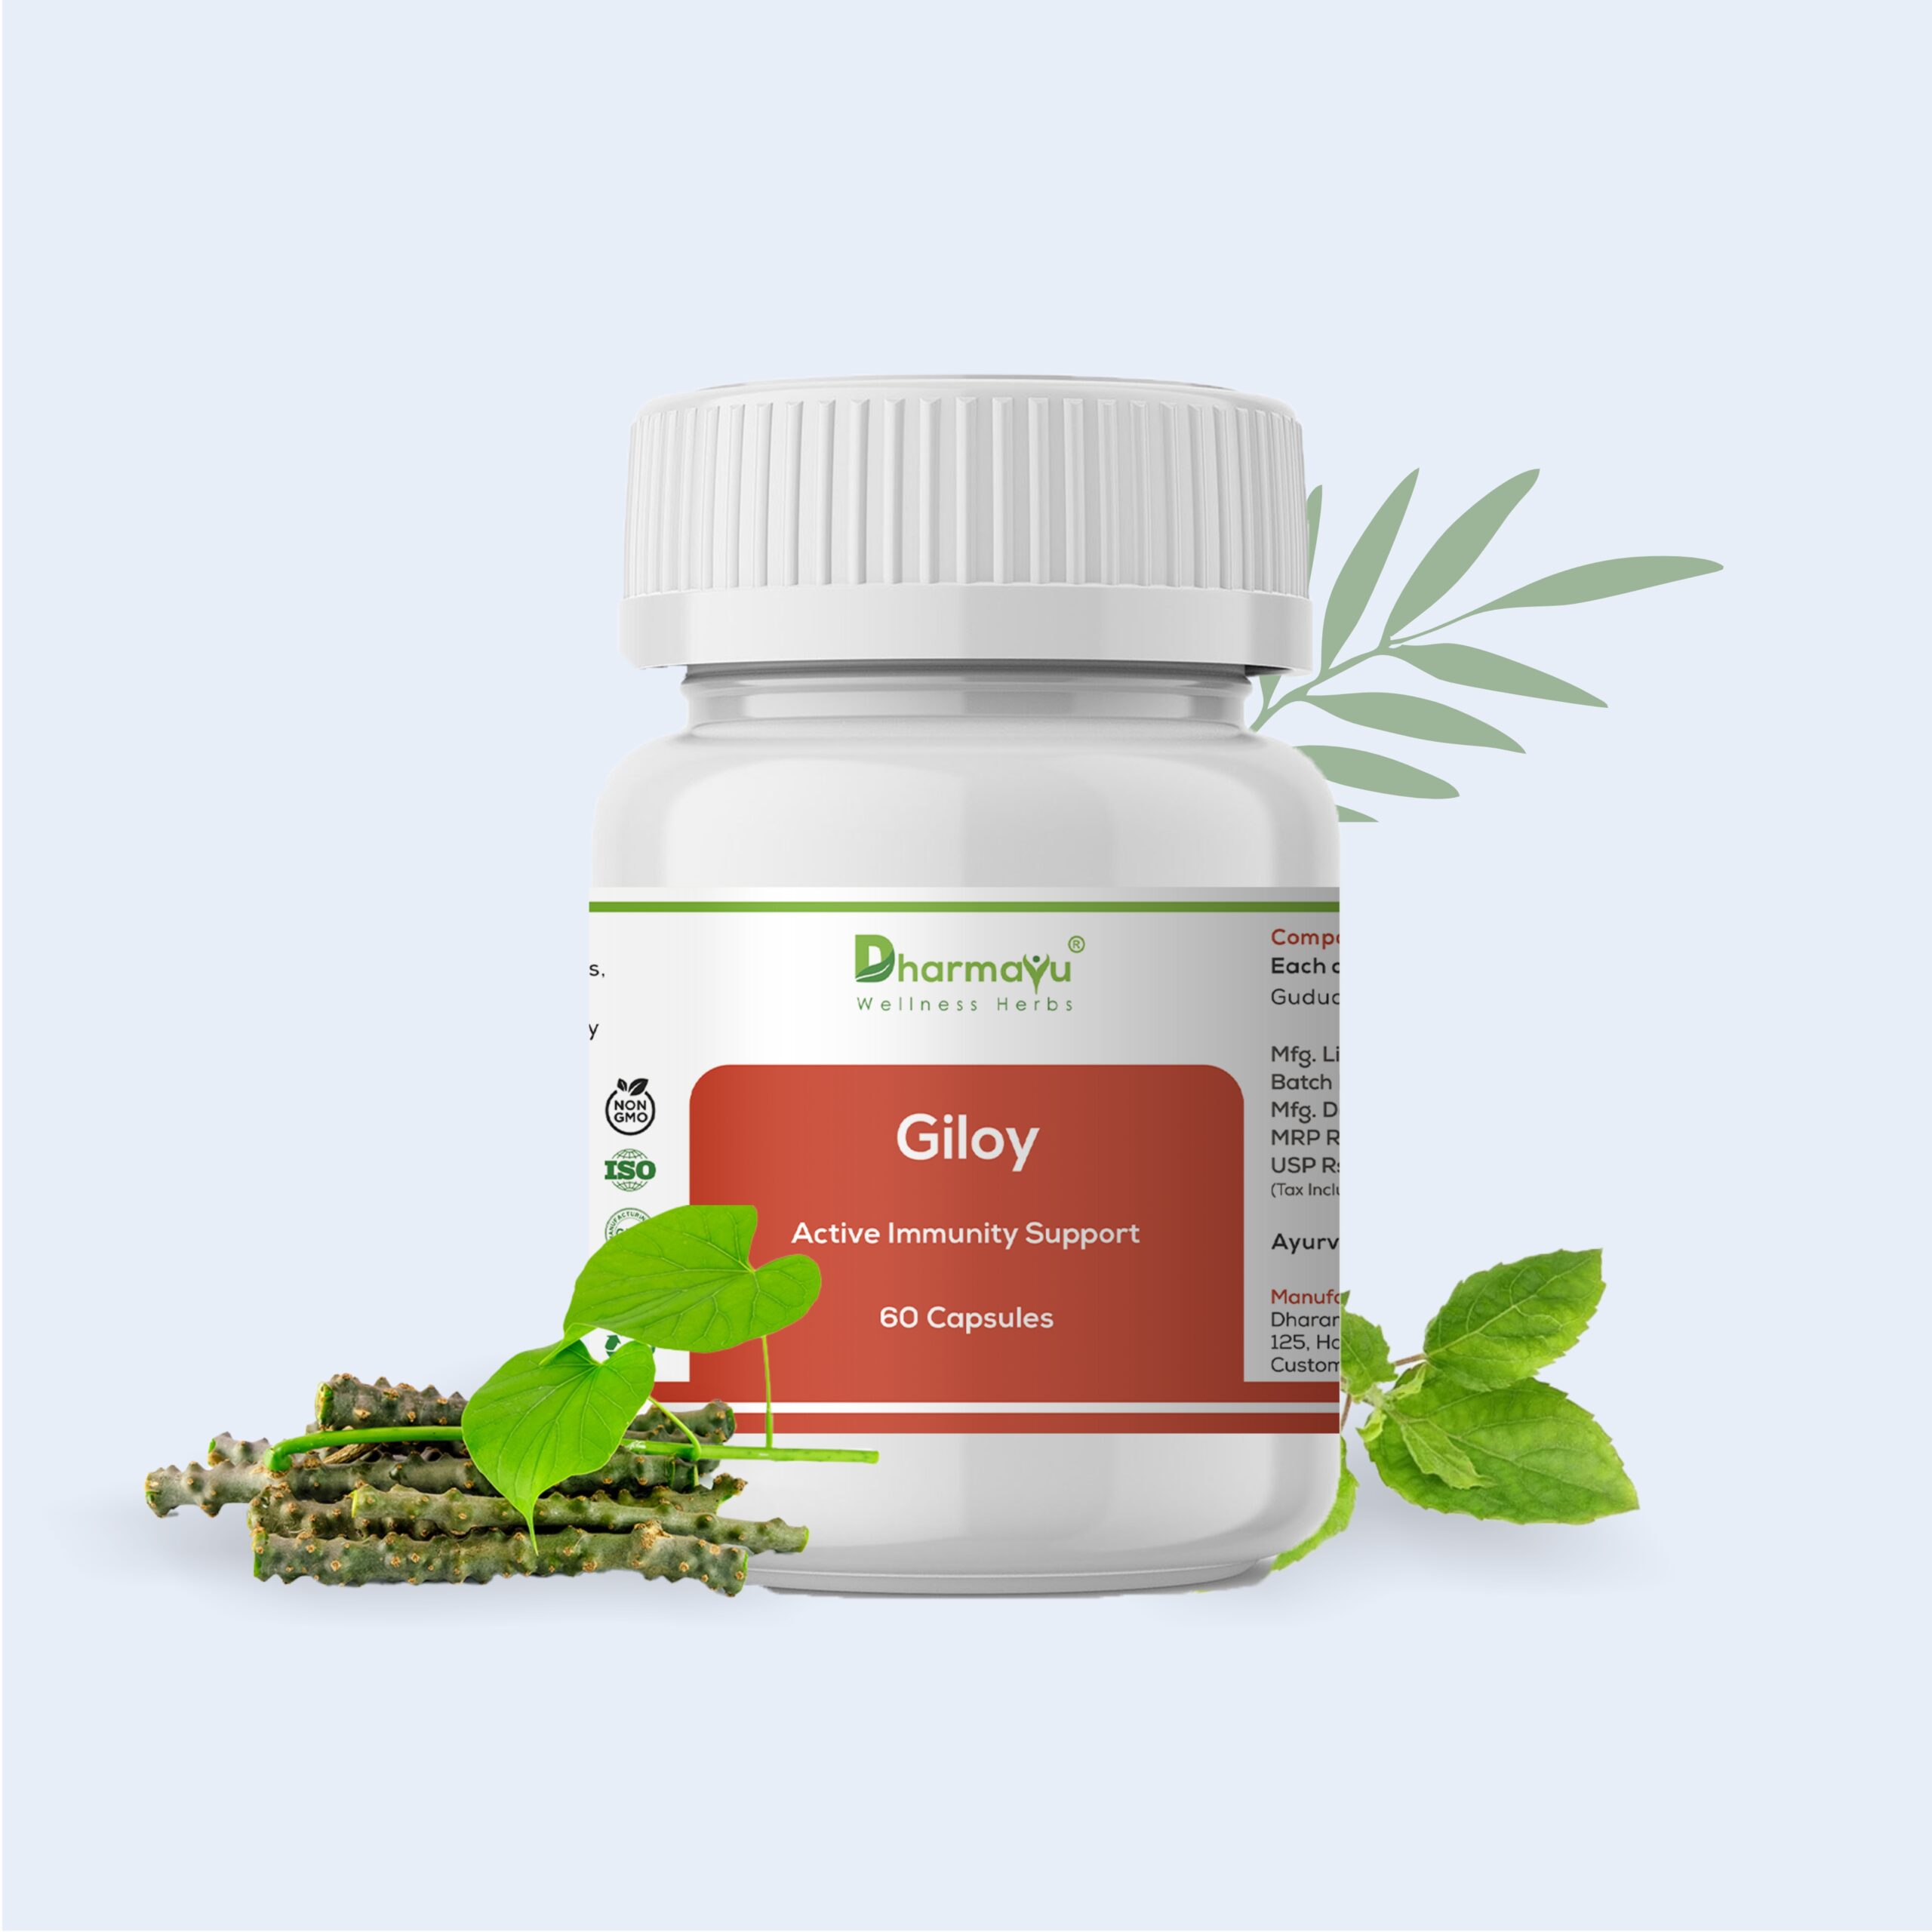 Dharmayu Giloy Active Immunity Support